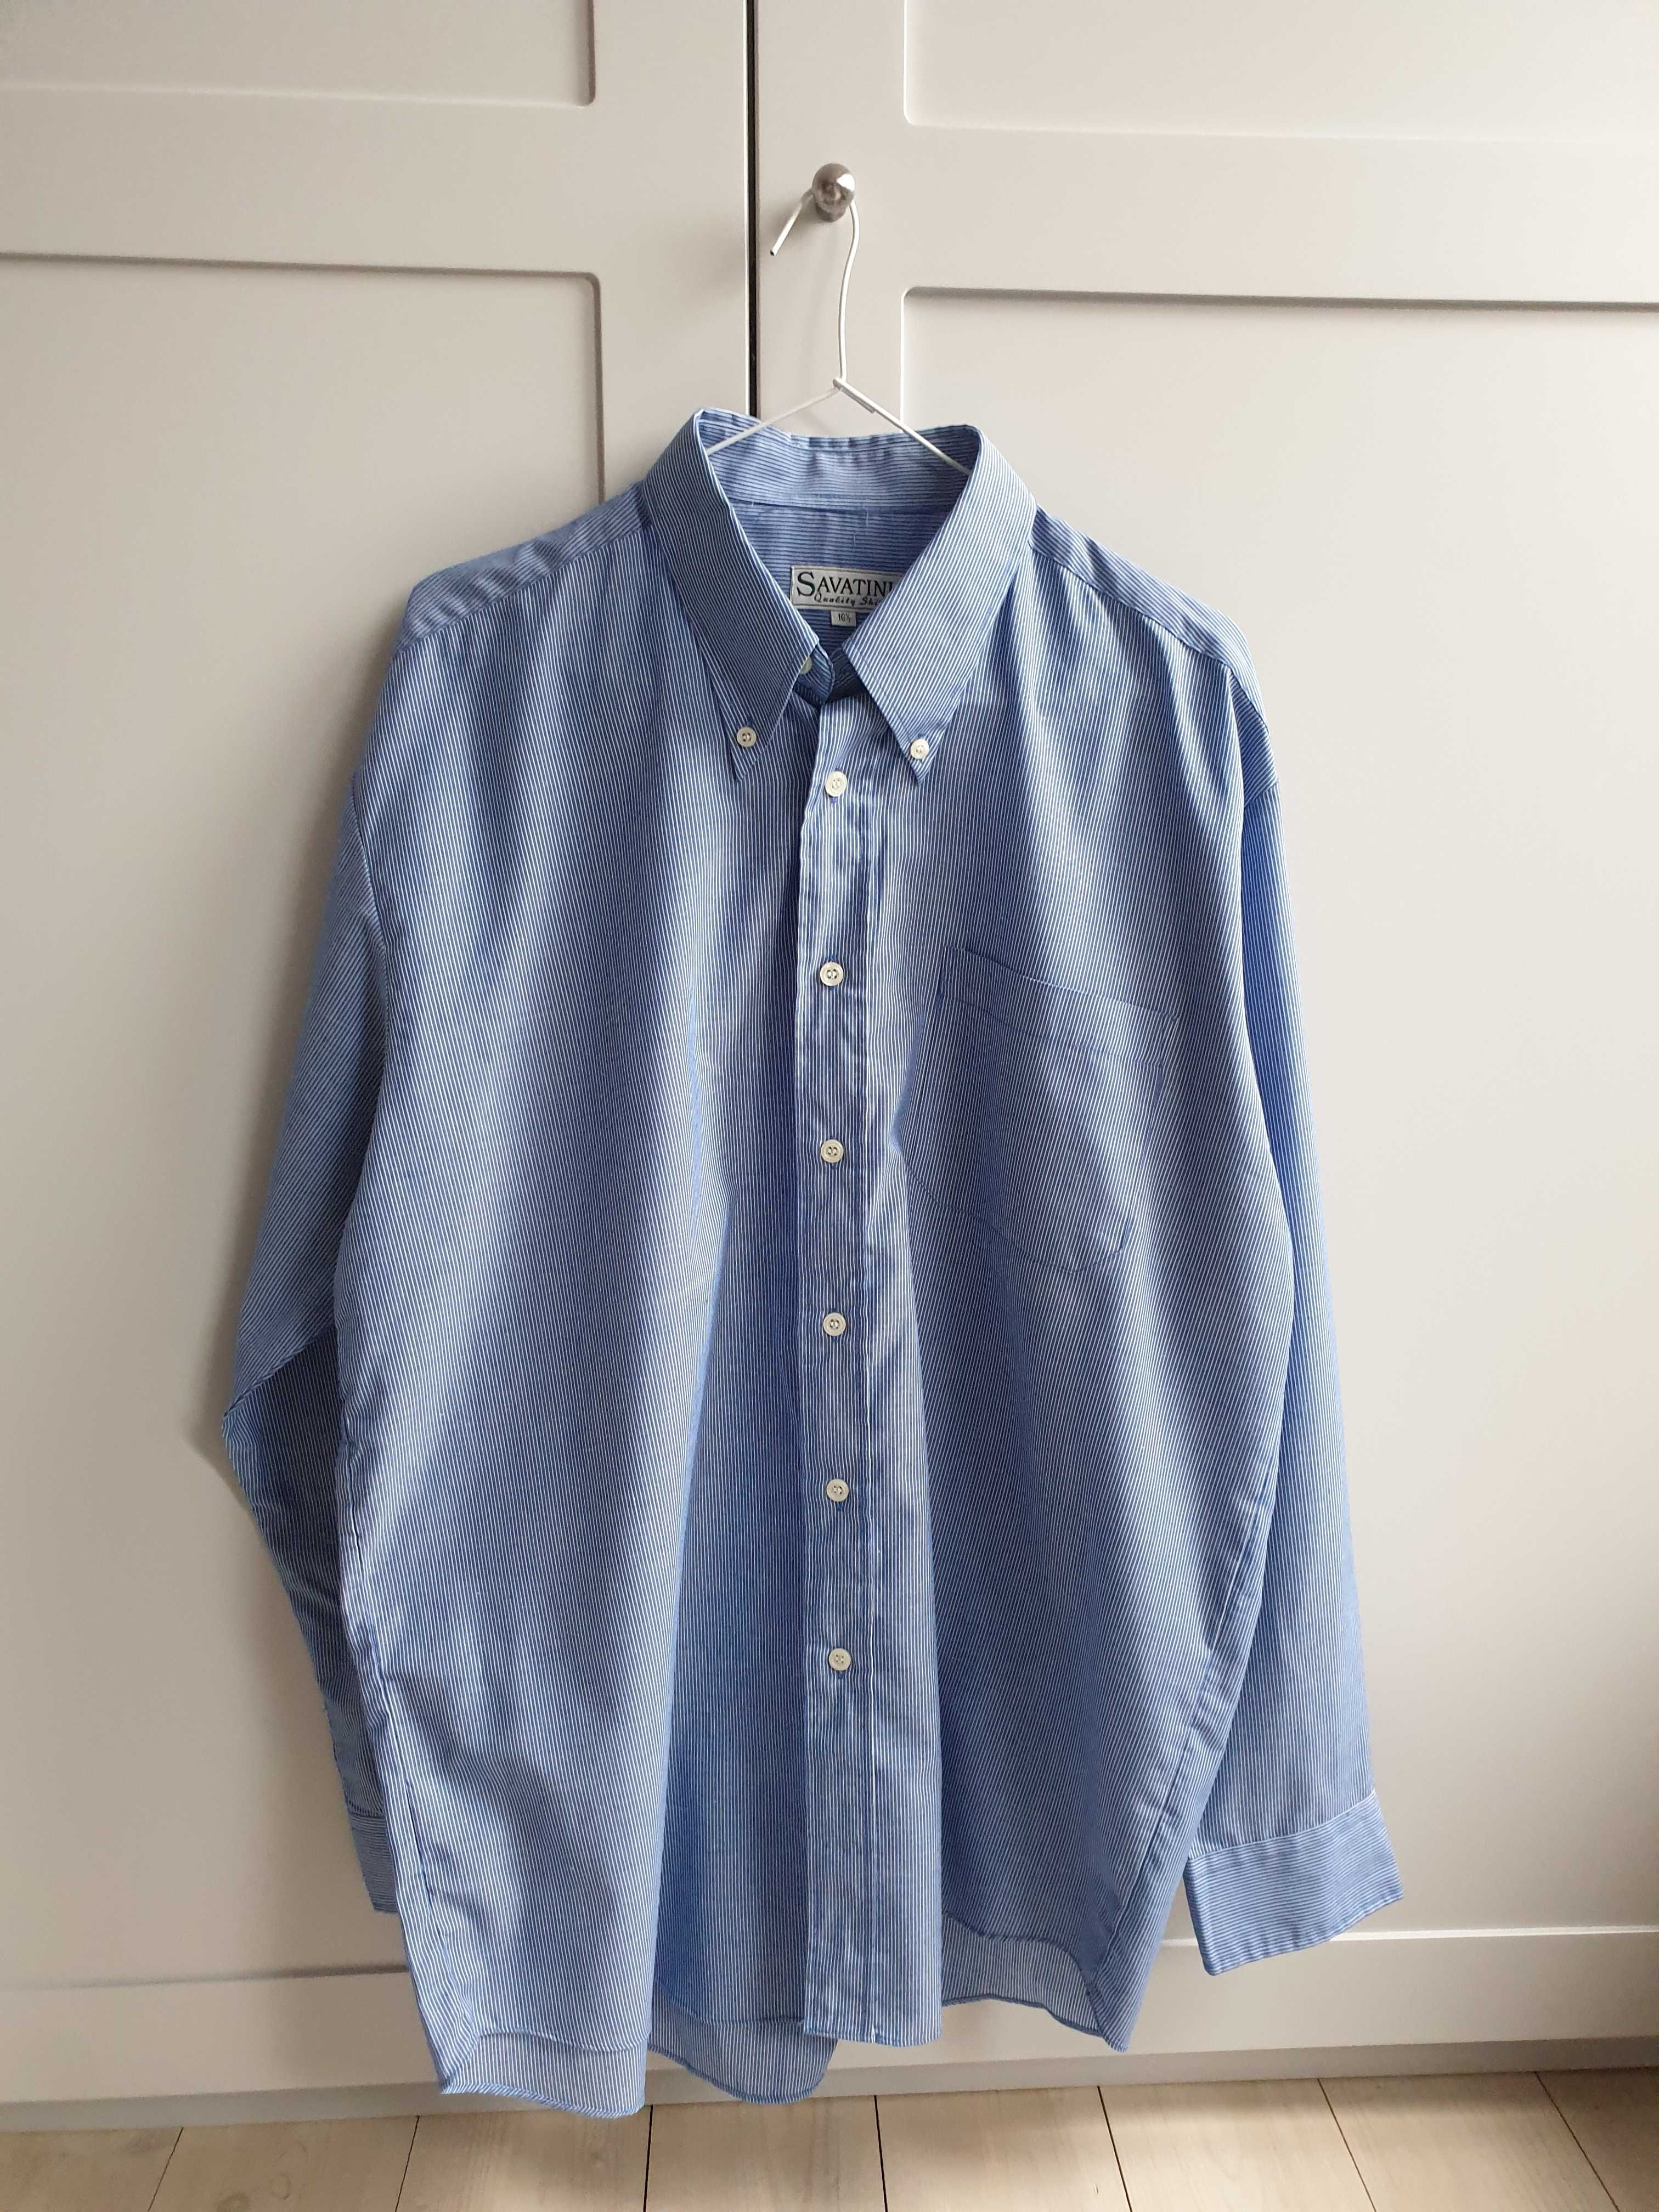 Niebieska koszula męska w paski L XL 42 Savatini